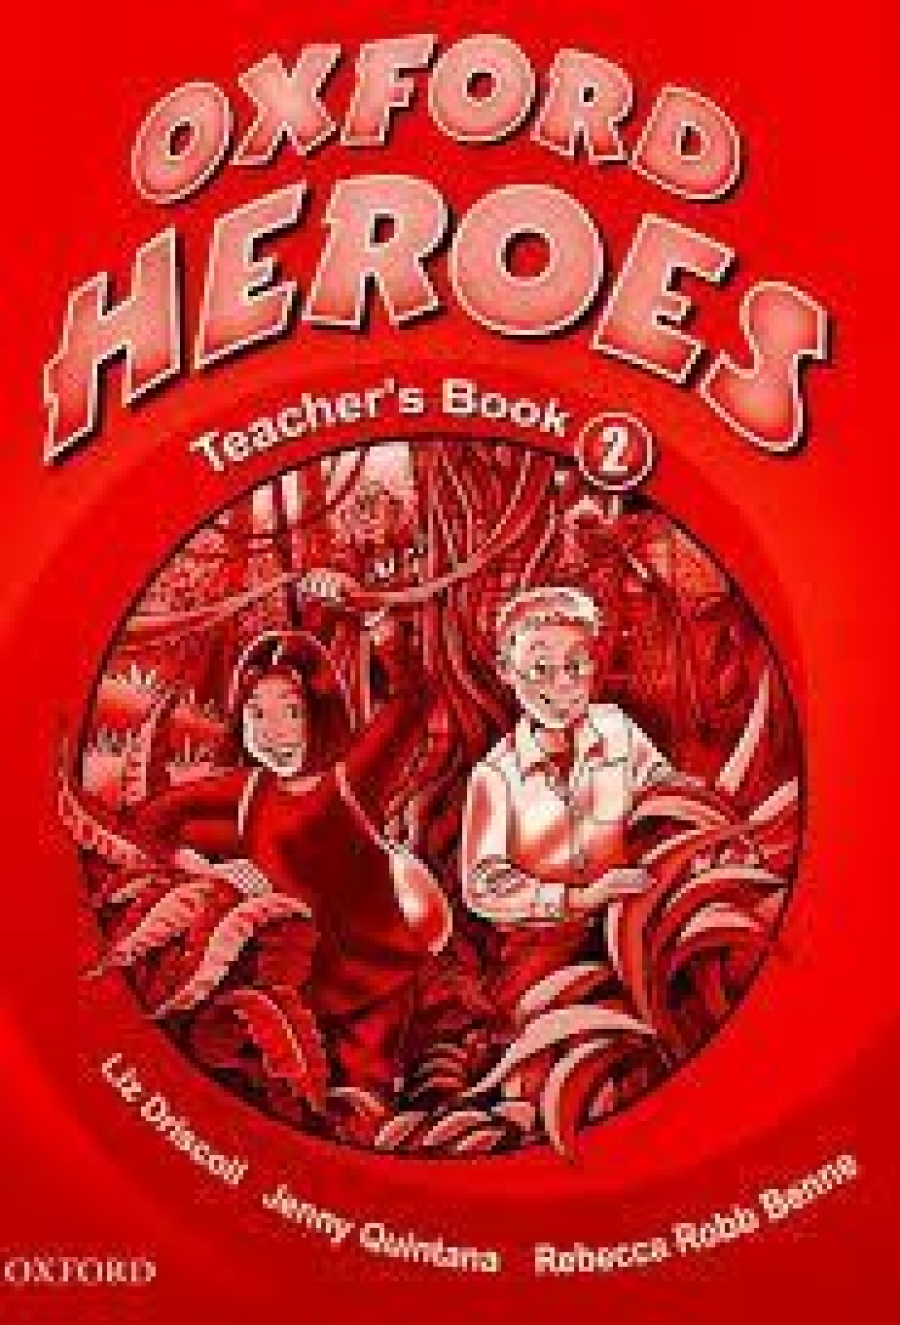 Rebecca Robb Benne, Jenny Quintana Oxford Heroes 2 Teacher's Book 